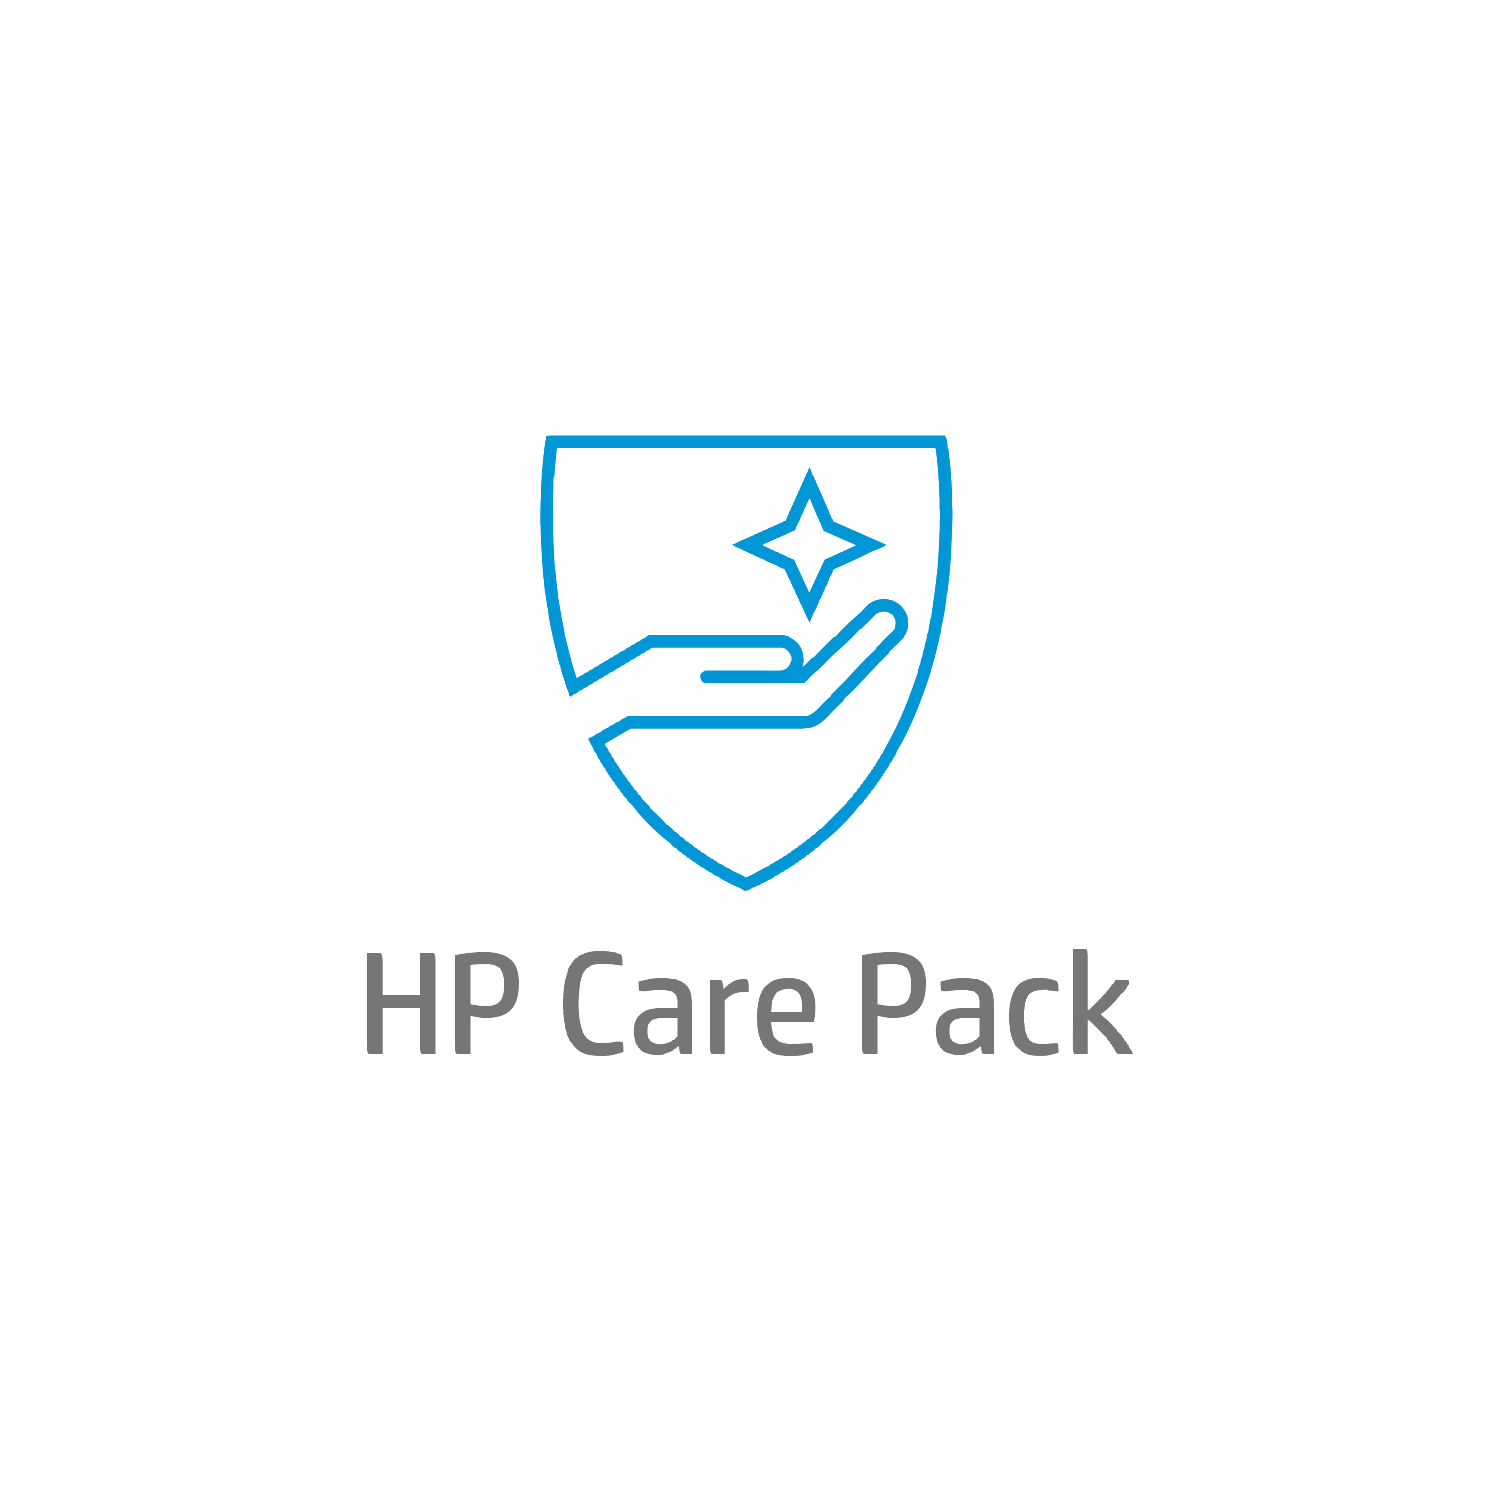 Bild von HP Electronic HP Care Pack Parts Coverage Hardware Support Post Warranty - Ausgabegeräte Service & Support